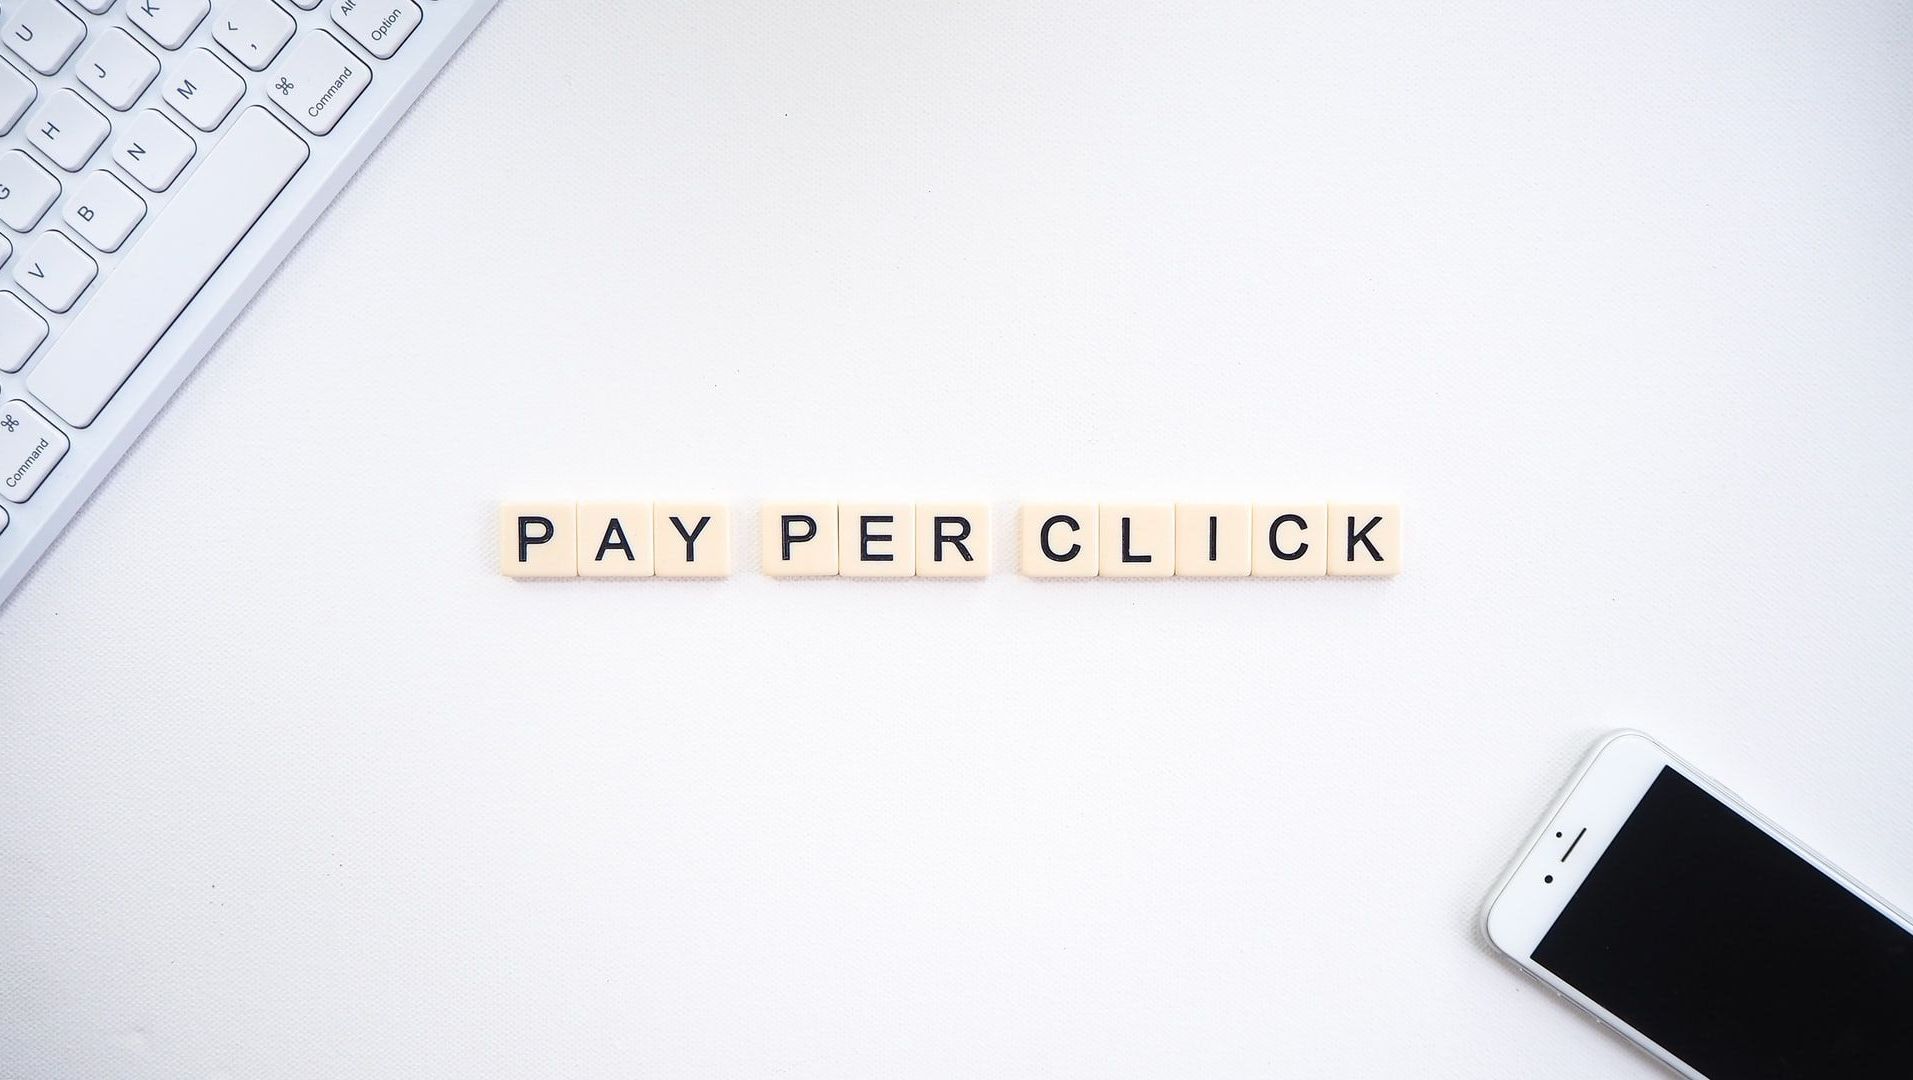 Scrabble brikker som viser "Pay per click"